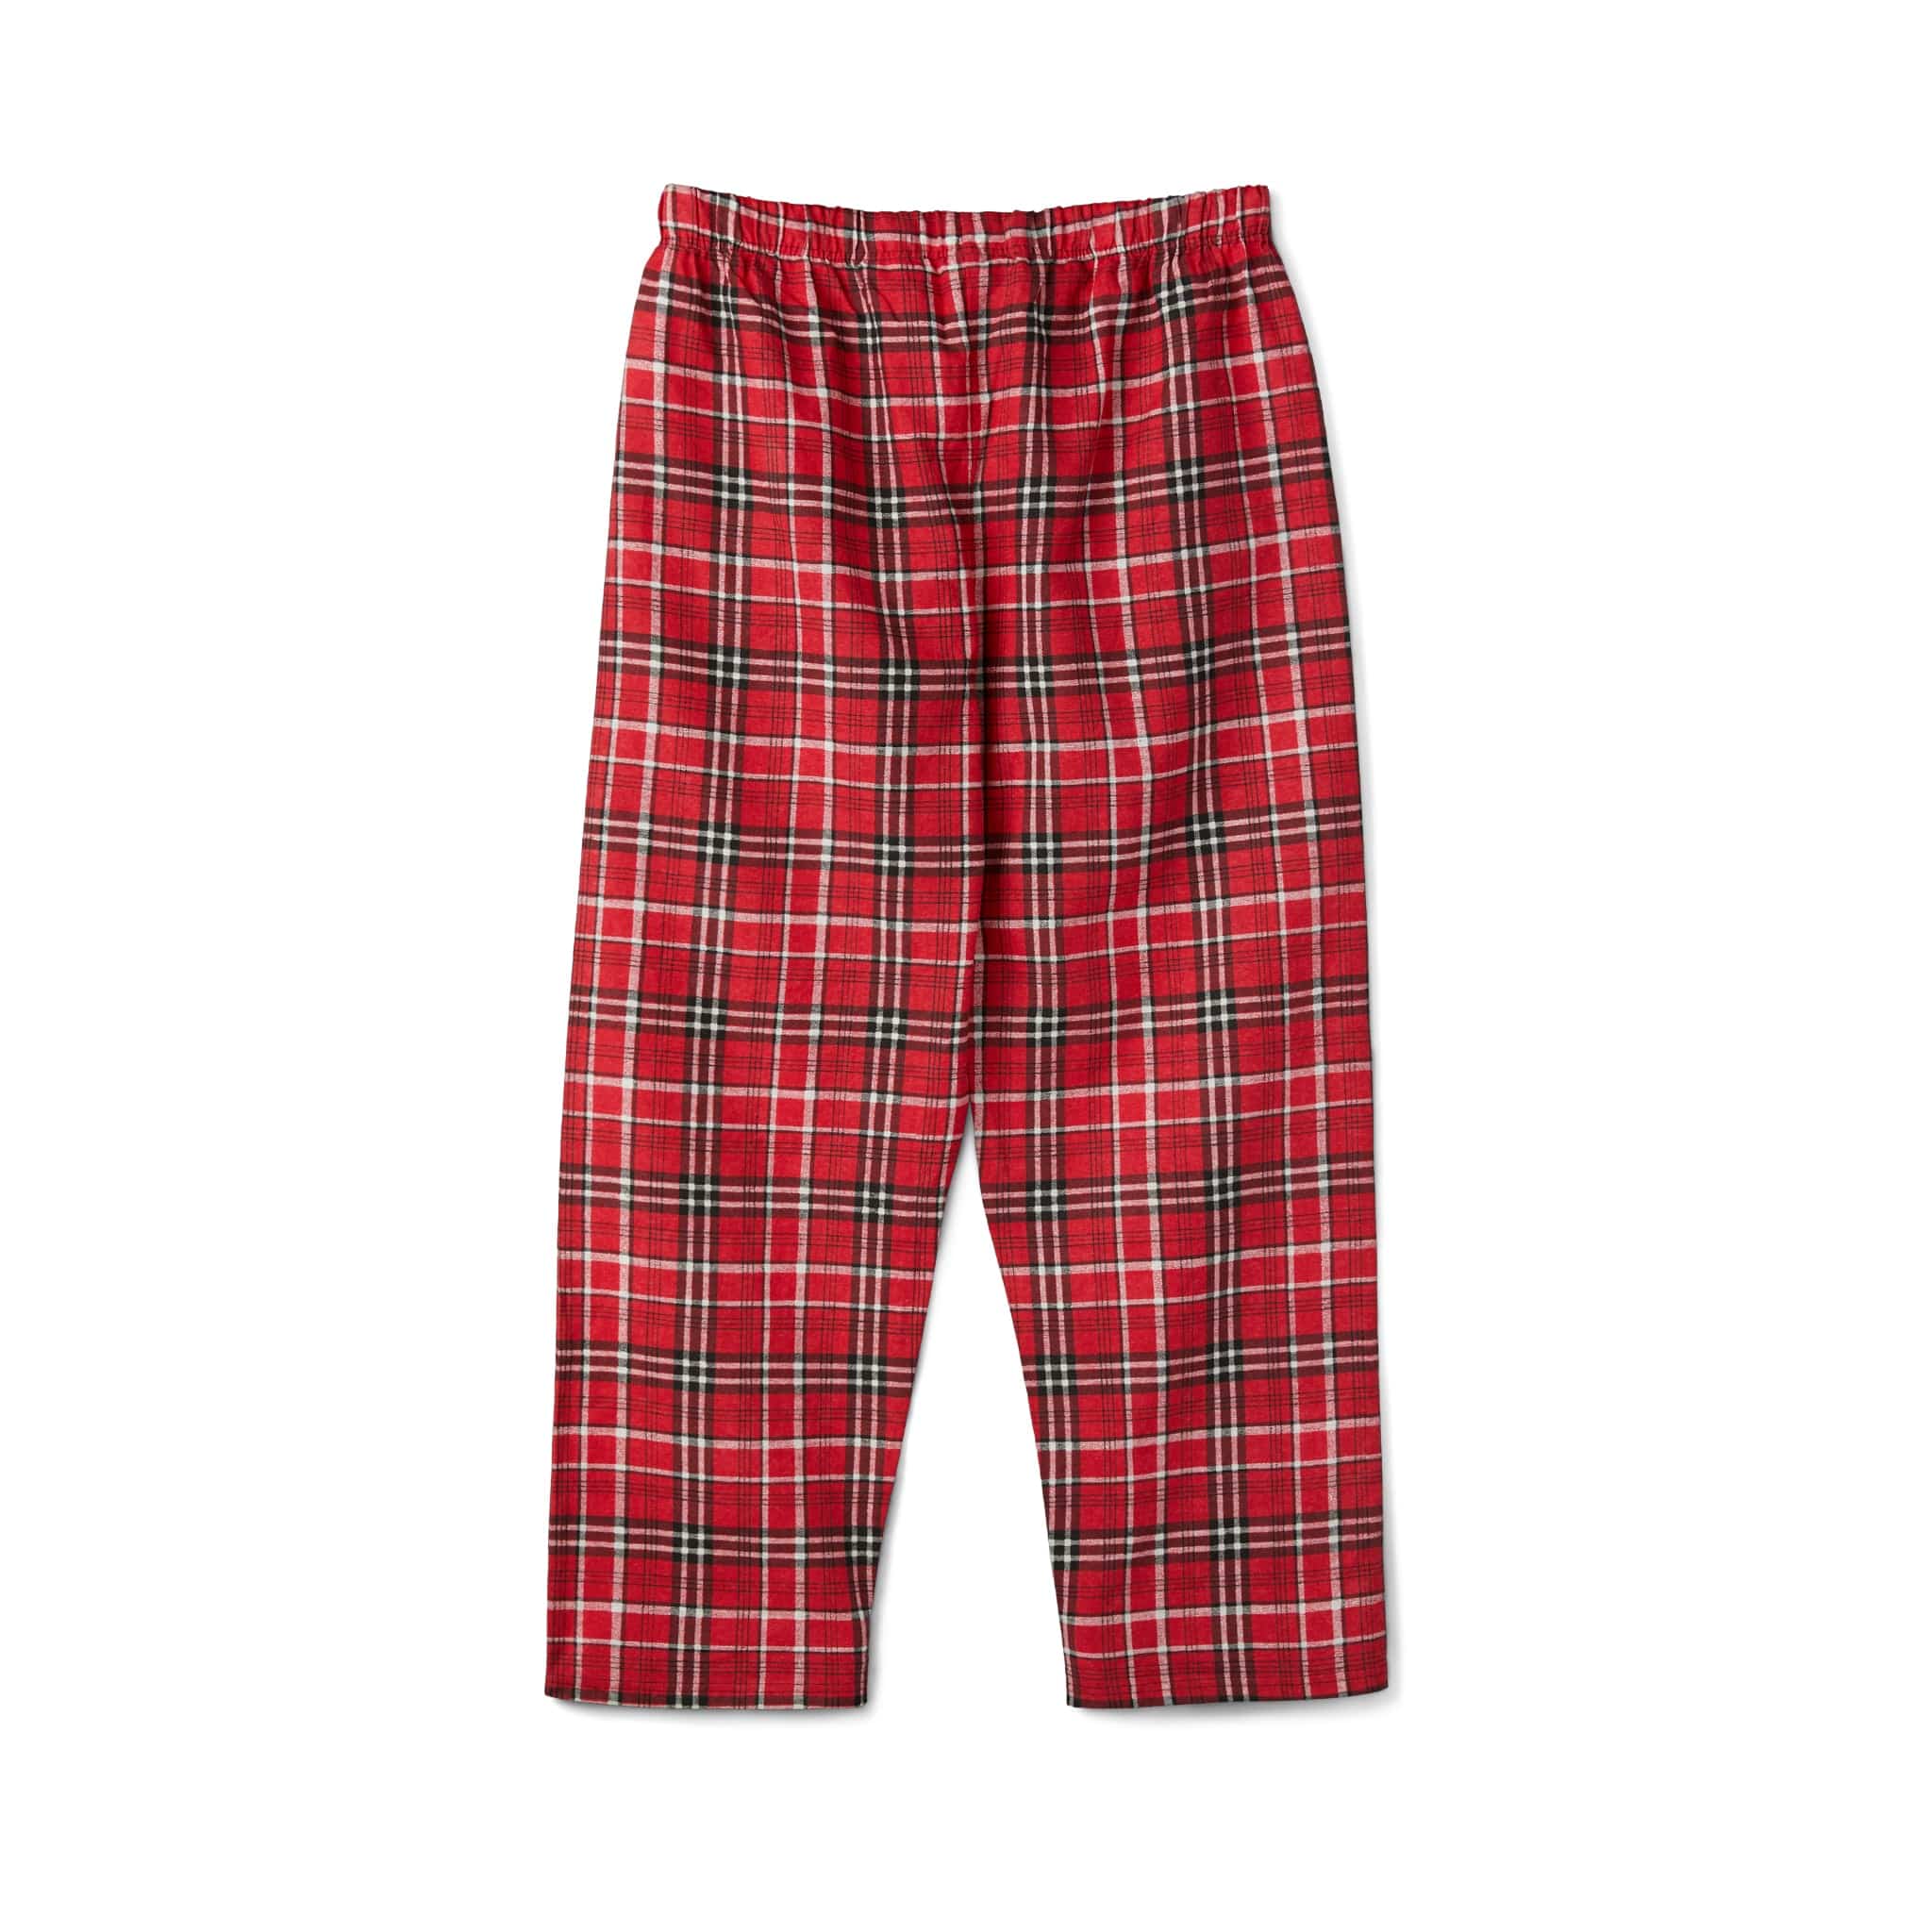 King Of Hearts Men's Short Sleeve Pajama Set